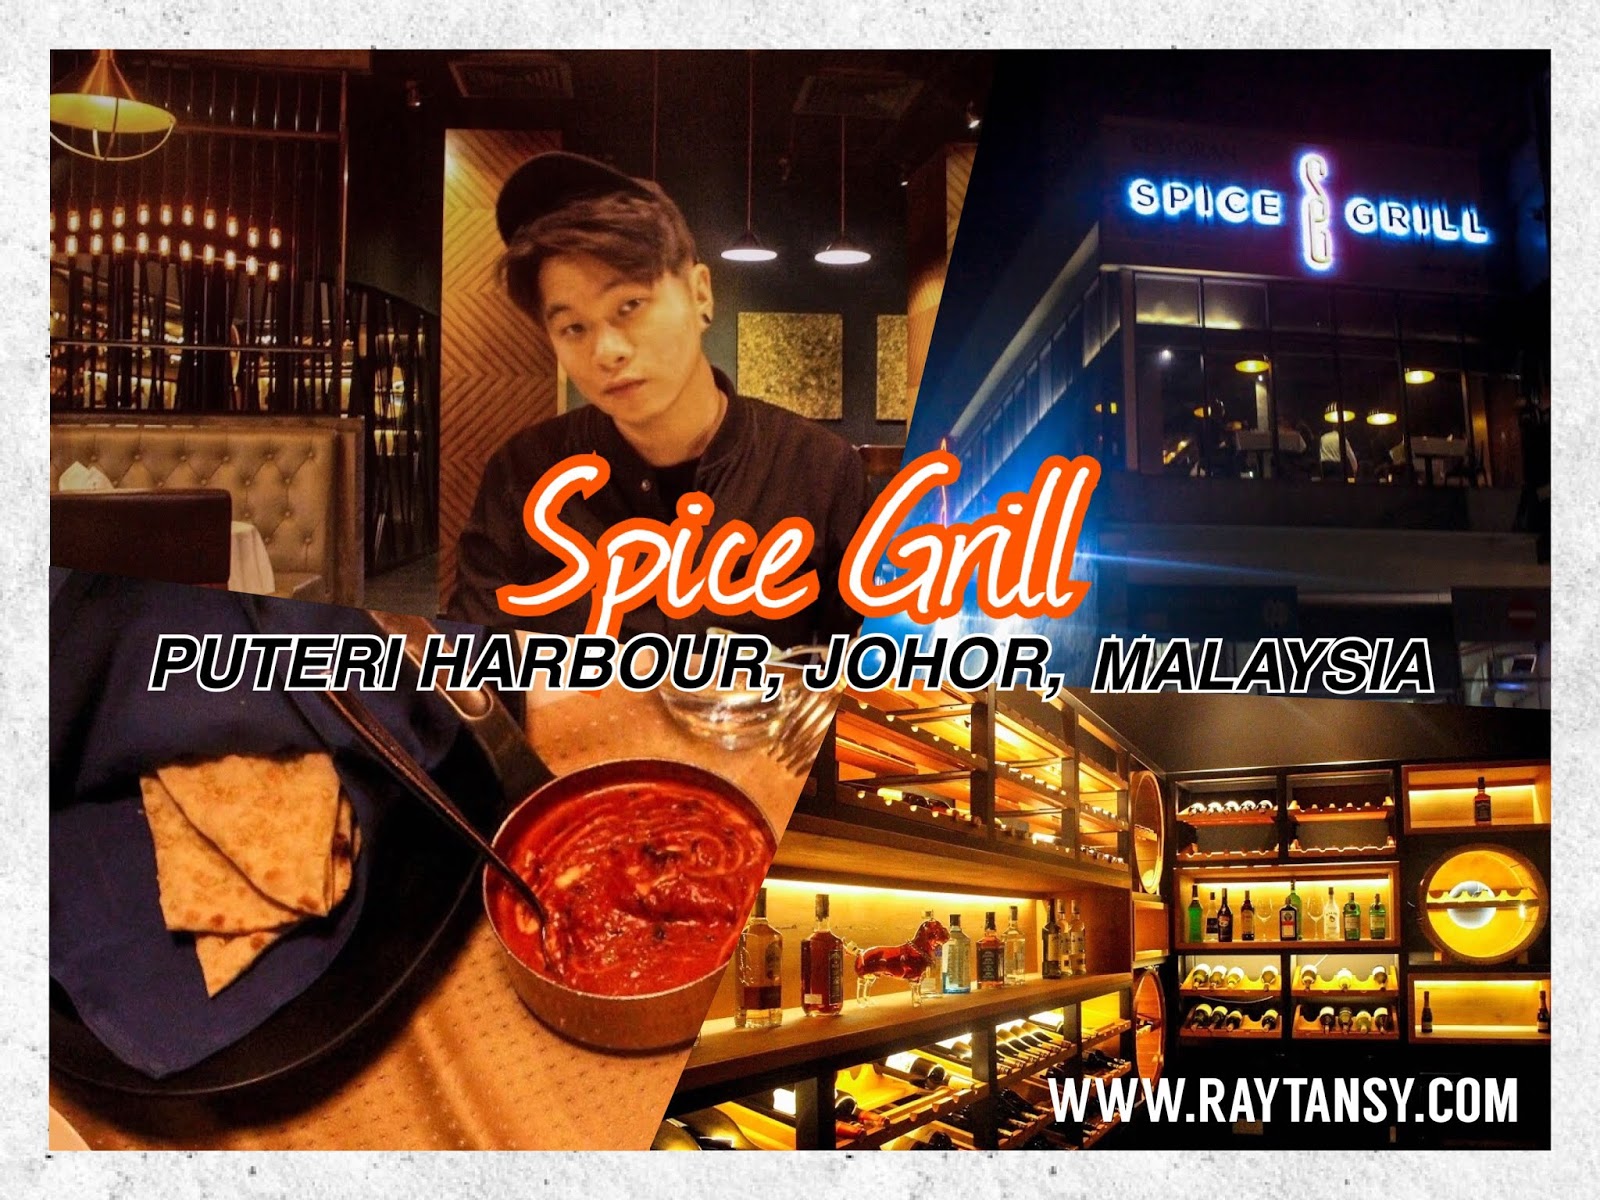 Ray Tan 陳學沿 (raytansy) ; Spice Grill @ Puteri Harbour, Johor, Malaysia 新山 公主港 高级印度料理餐厅 南印度 印度餐